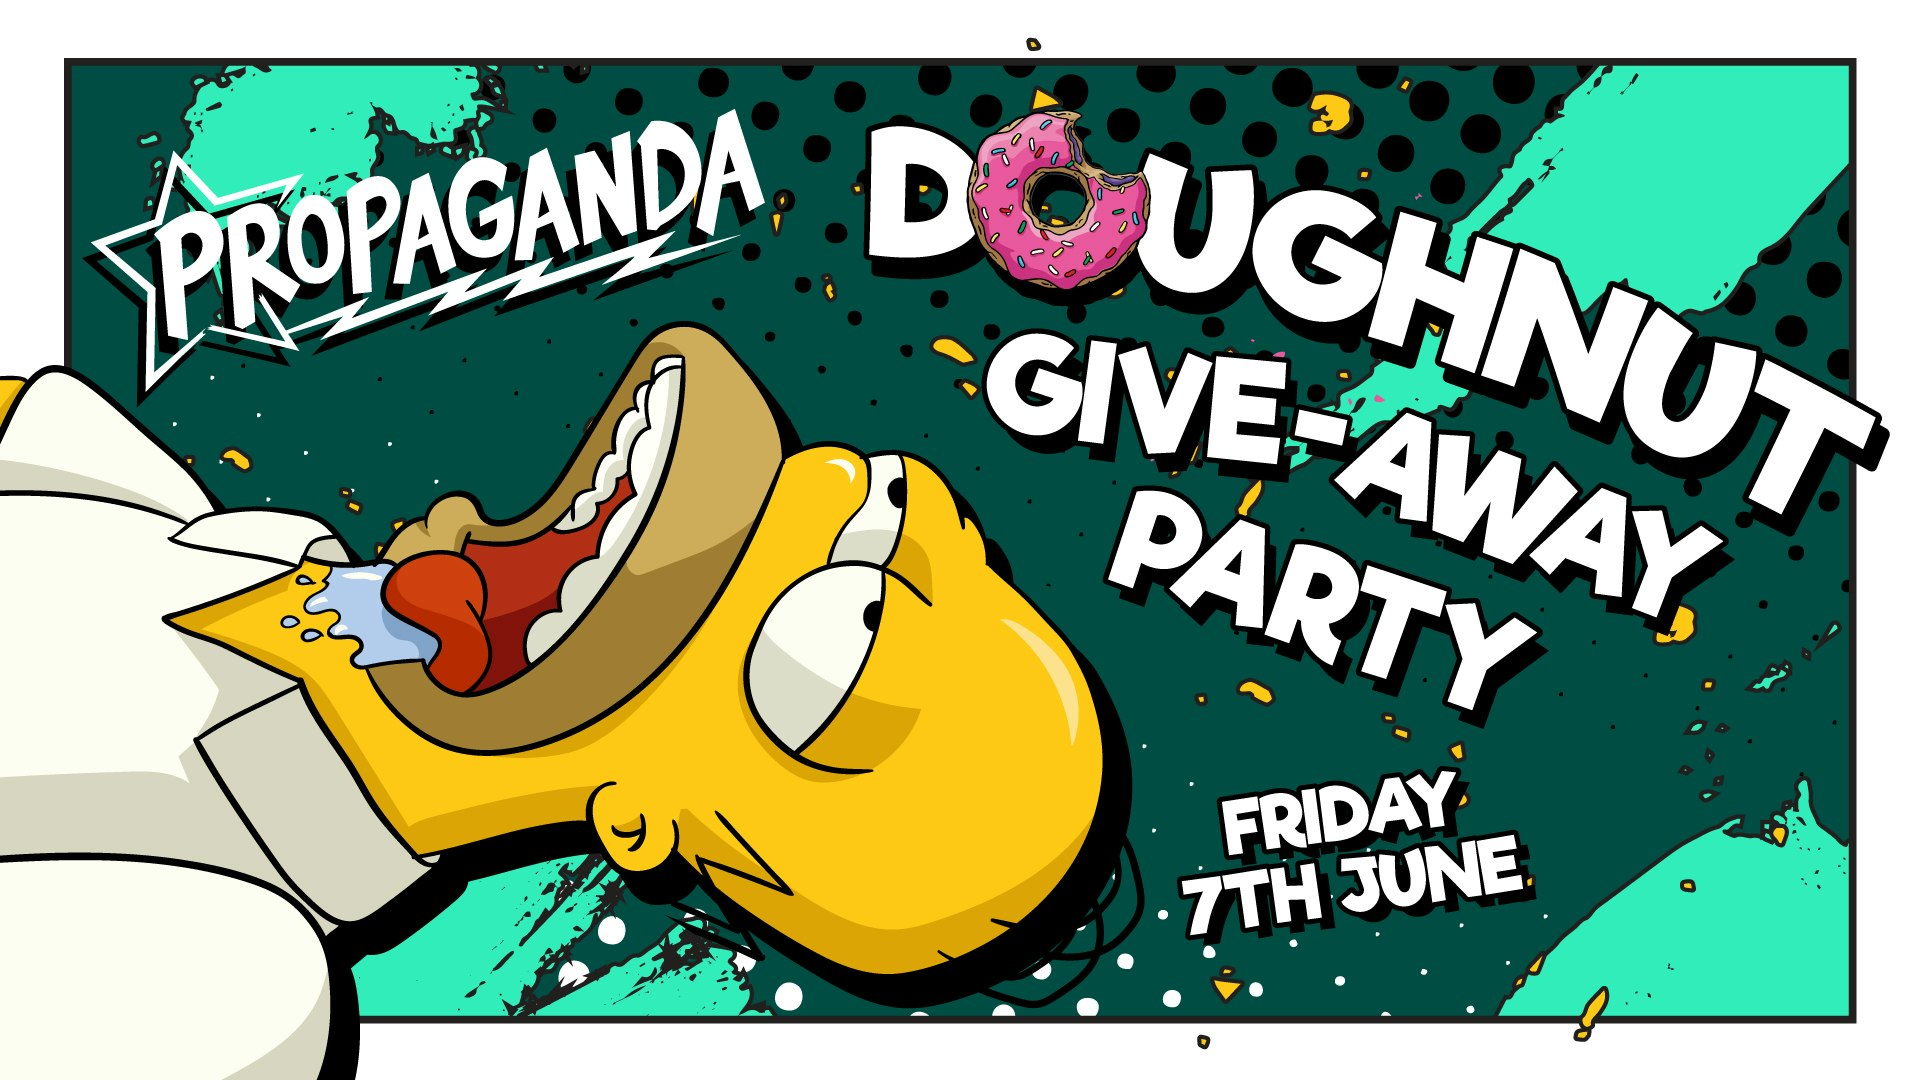 Propaganda Norwich – Doughnut Party